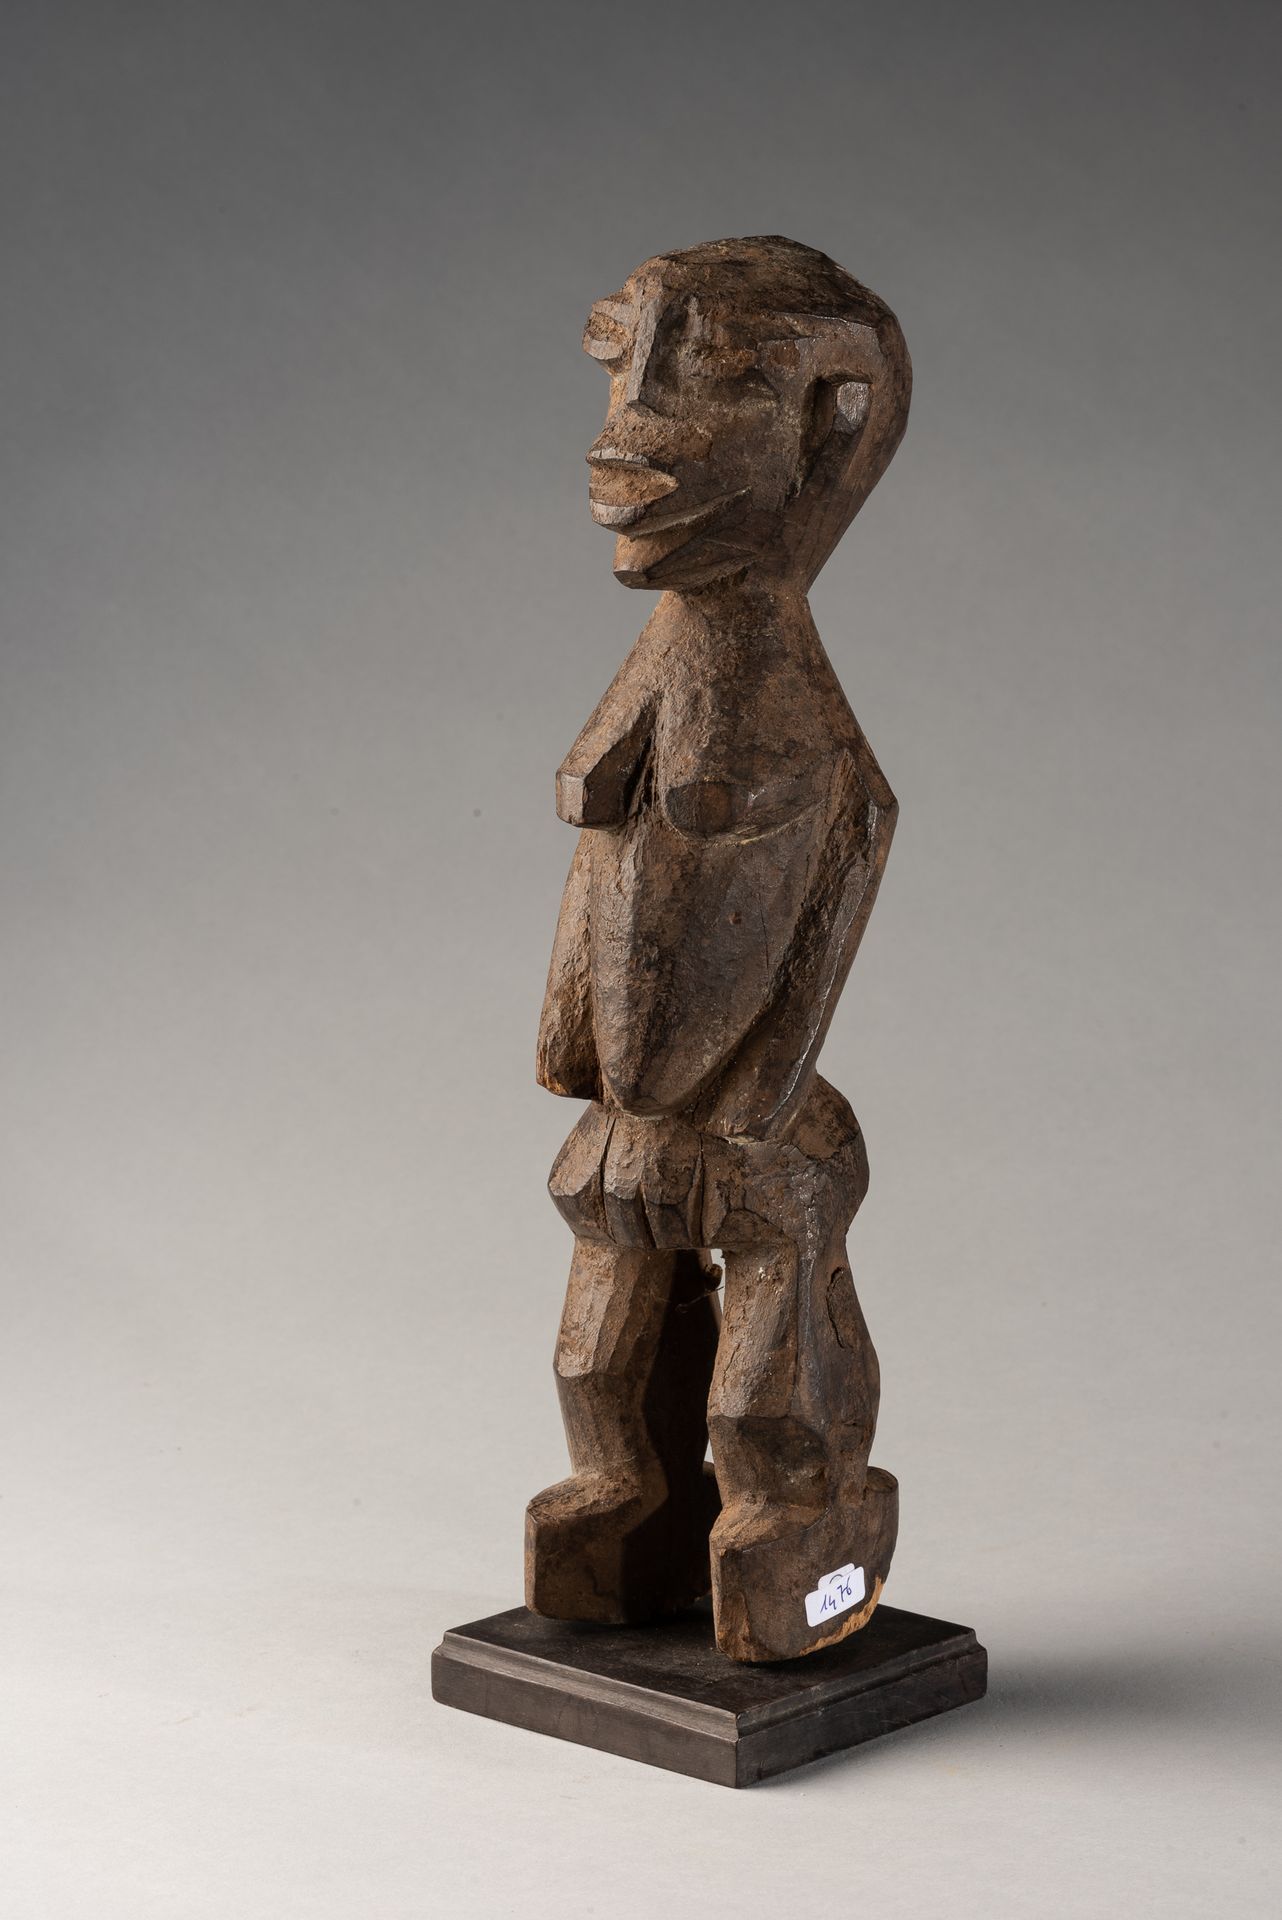 Peuple lobi Holzstatue, Lobi-Volk, Burkina Faso - Mitte des 20. Jahrhunderts 34 &hellip;